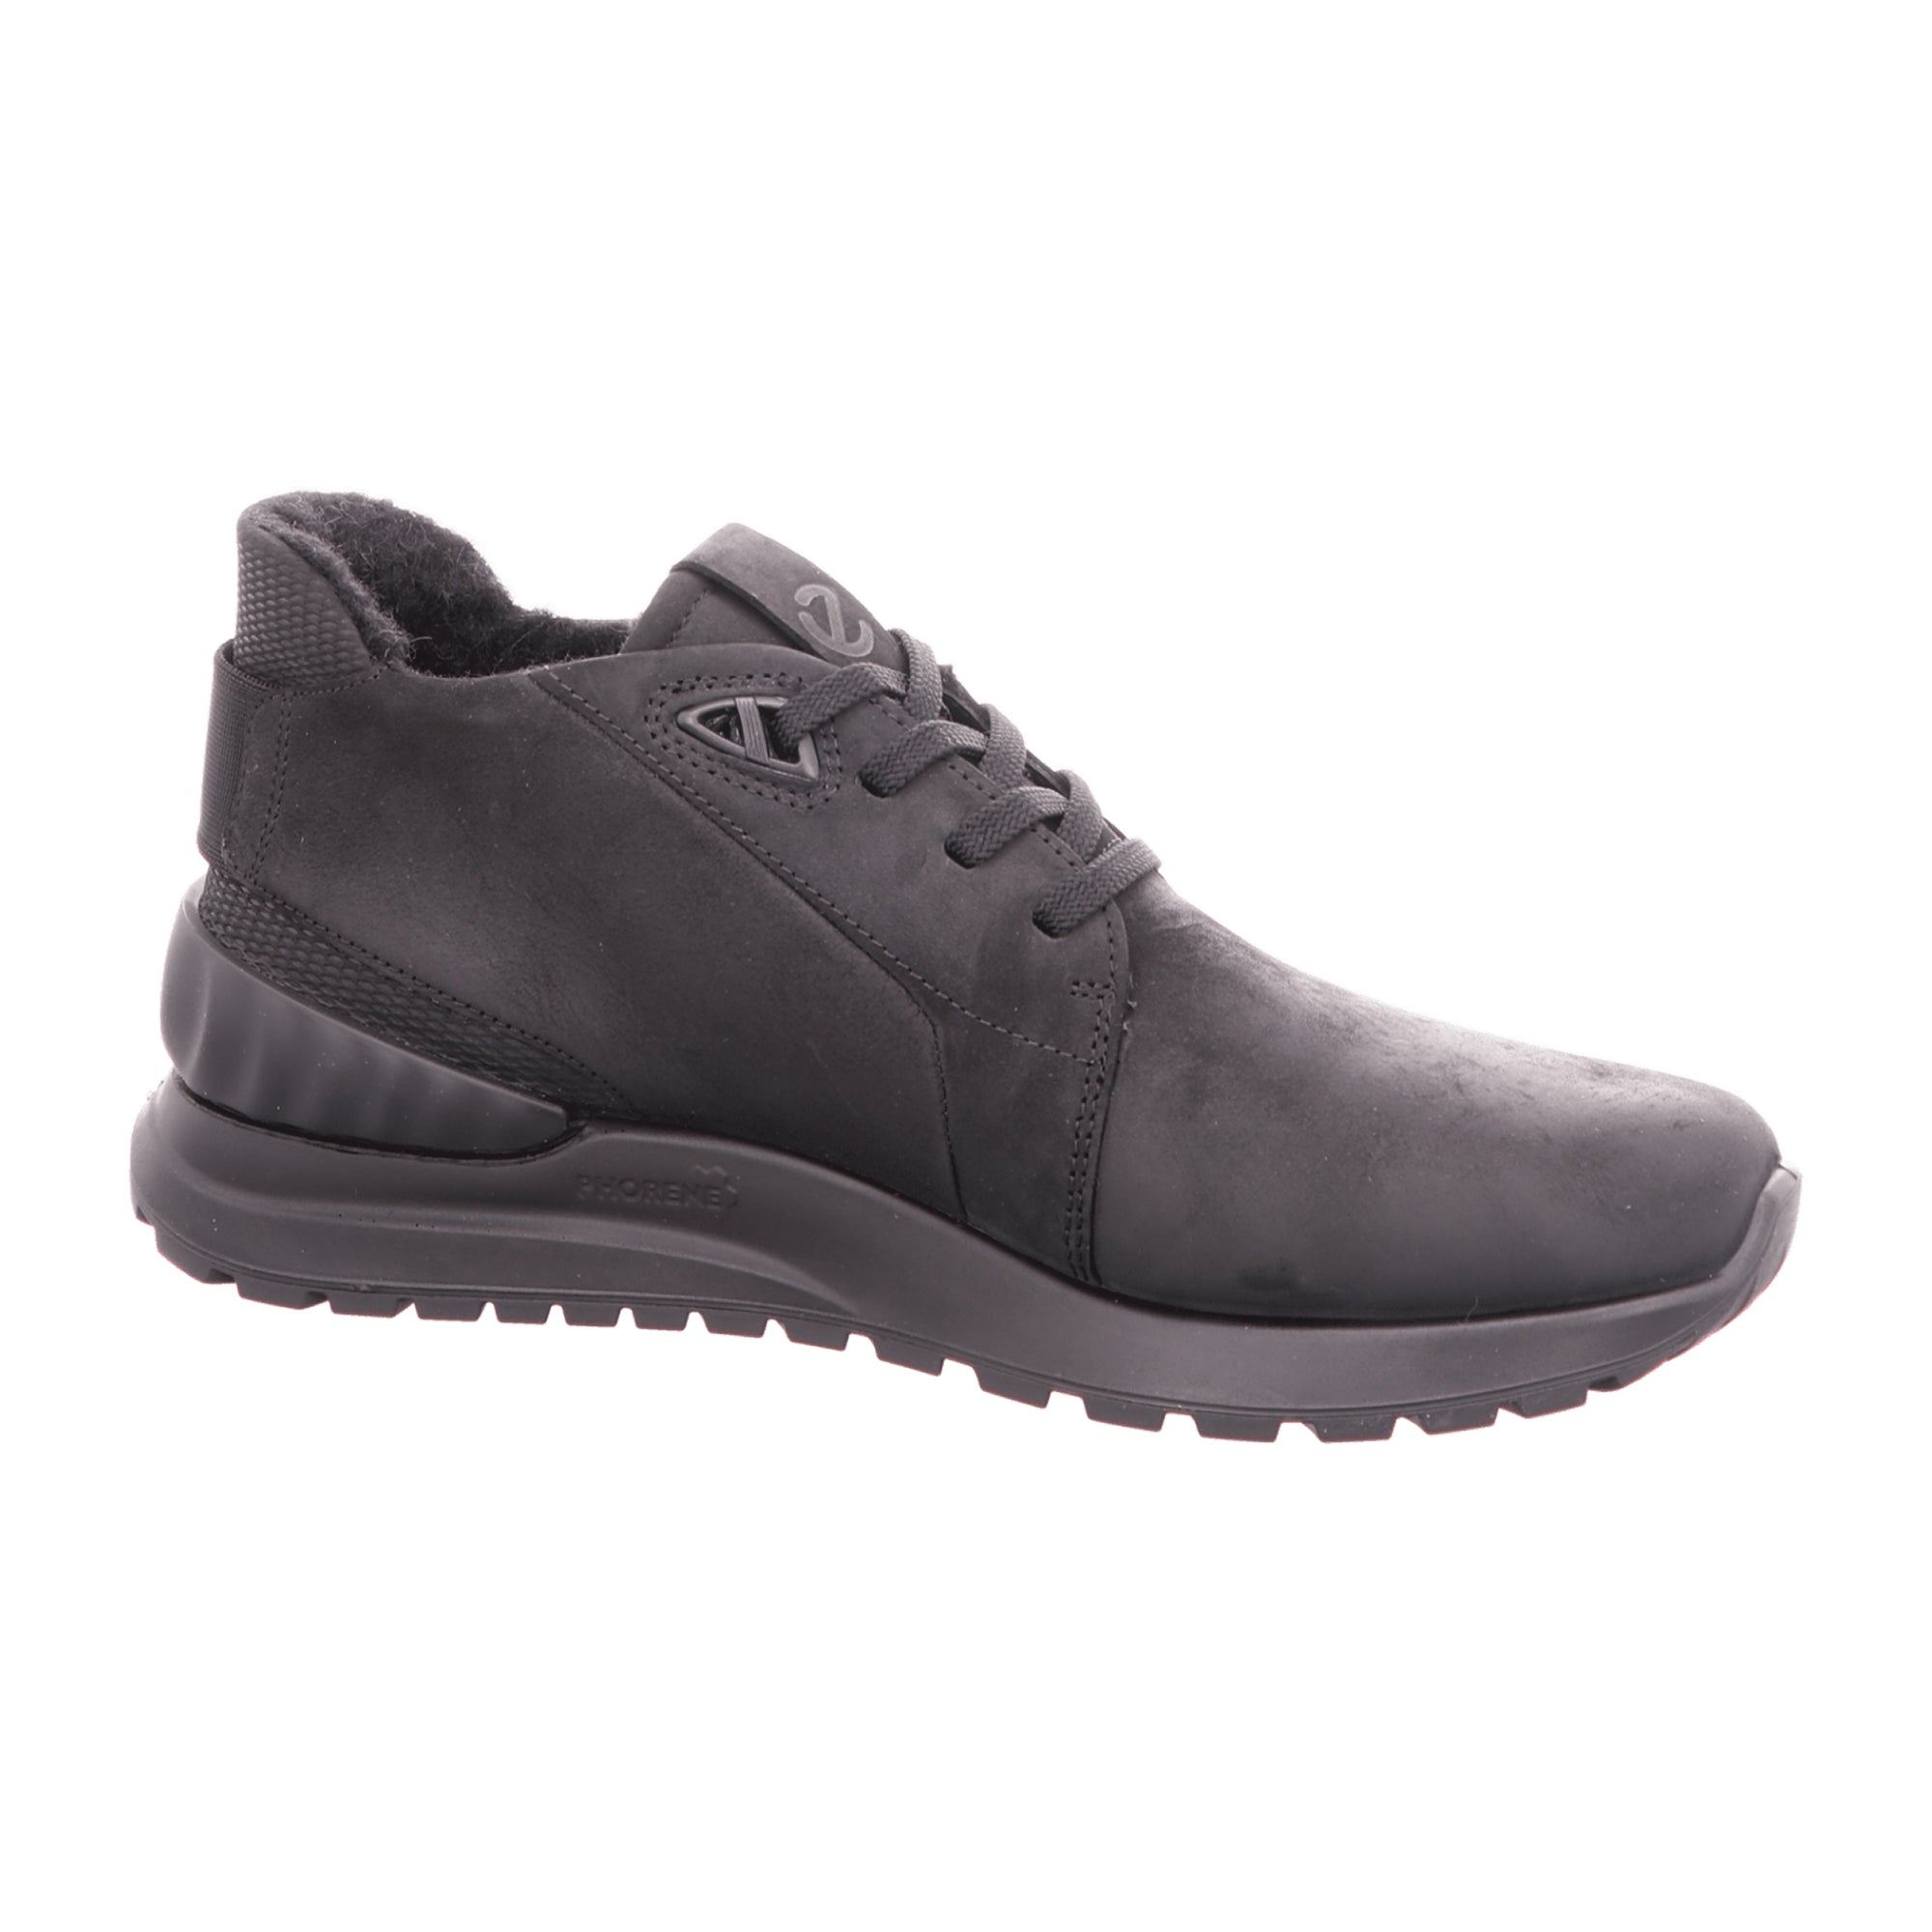 Ecco Astir Men's Sneakers - Durable, Stylish Black Leather